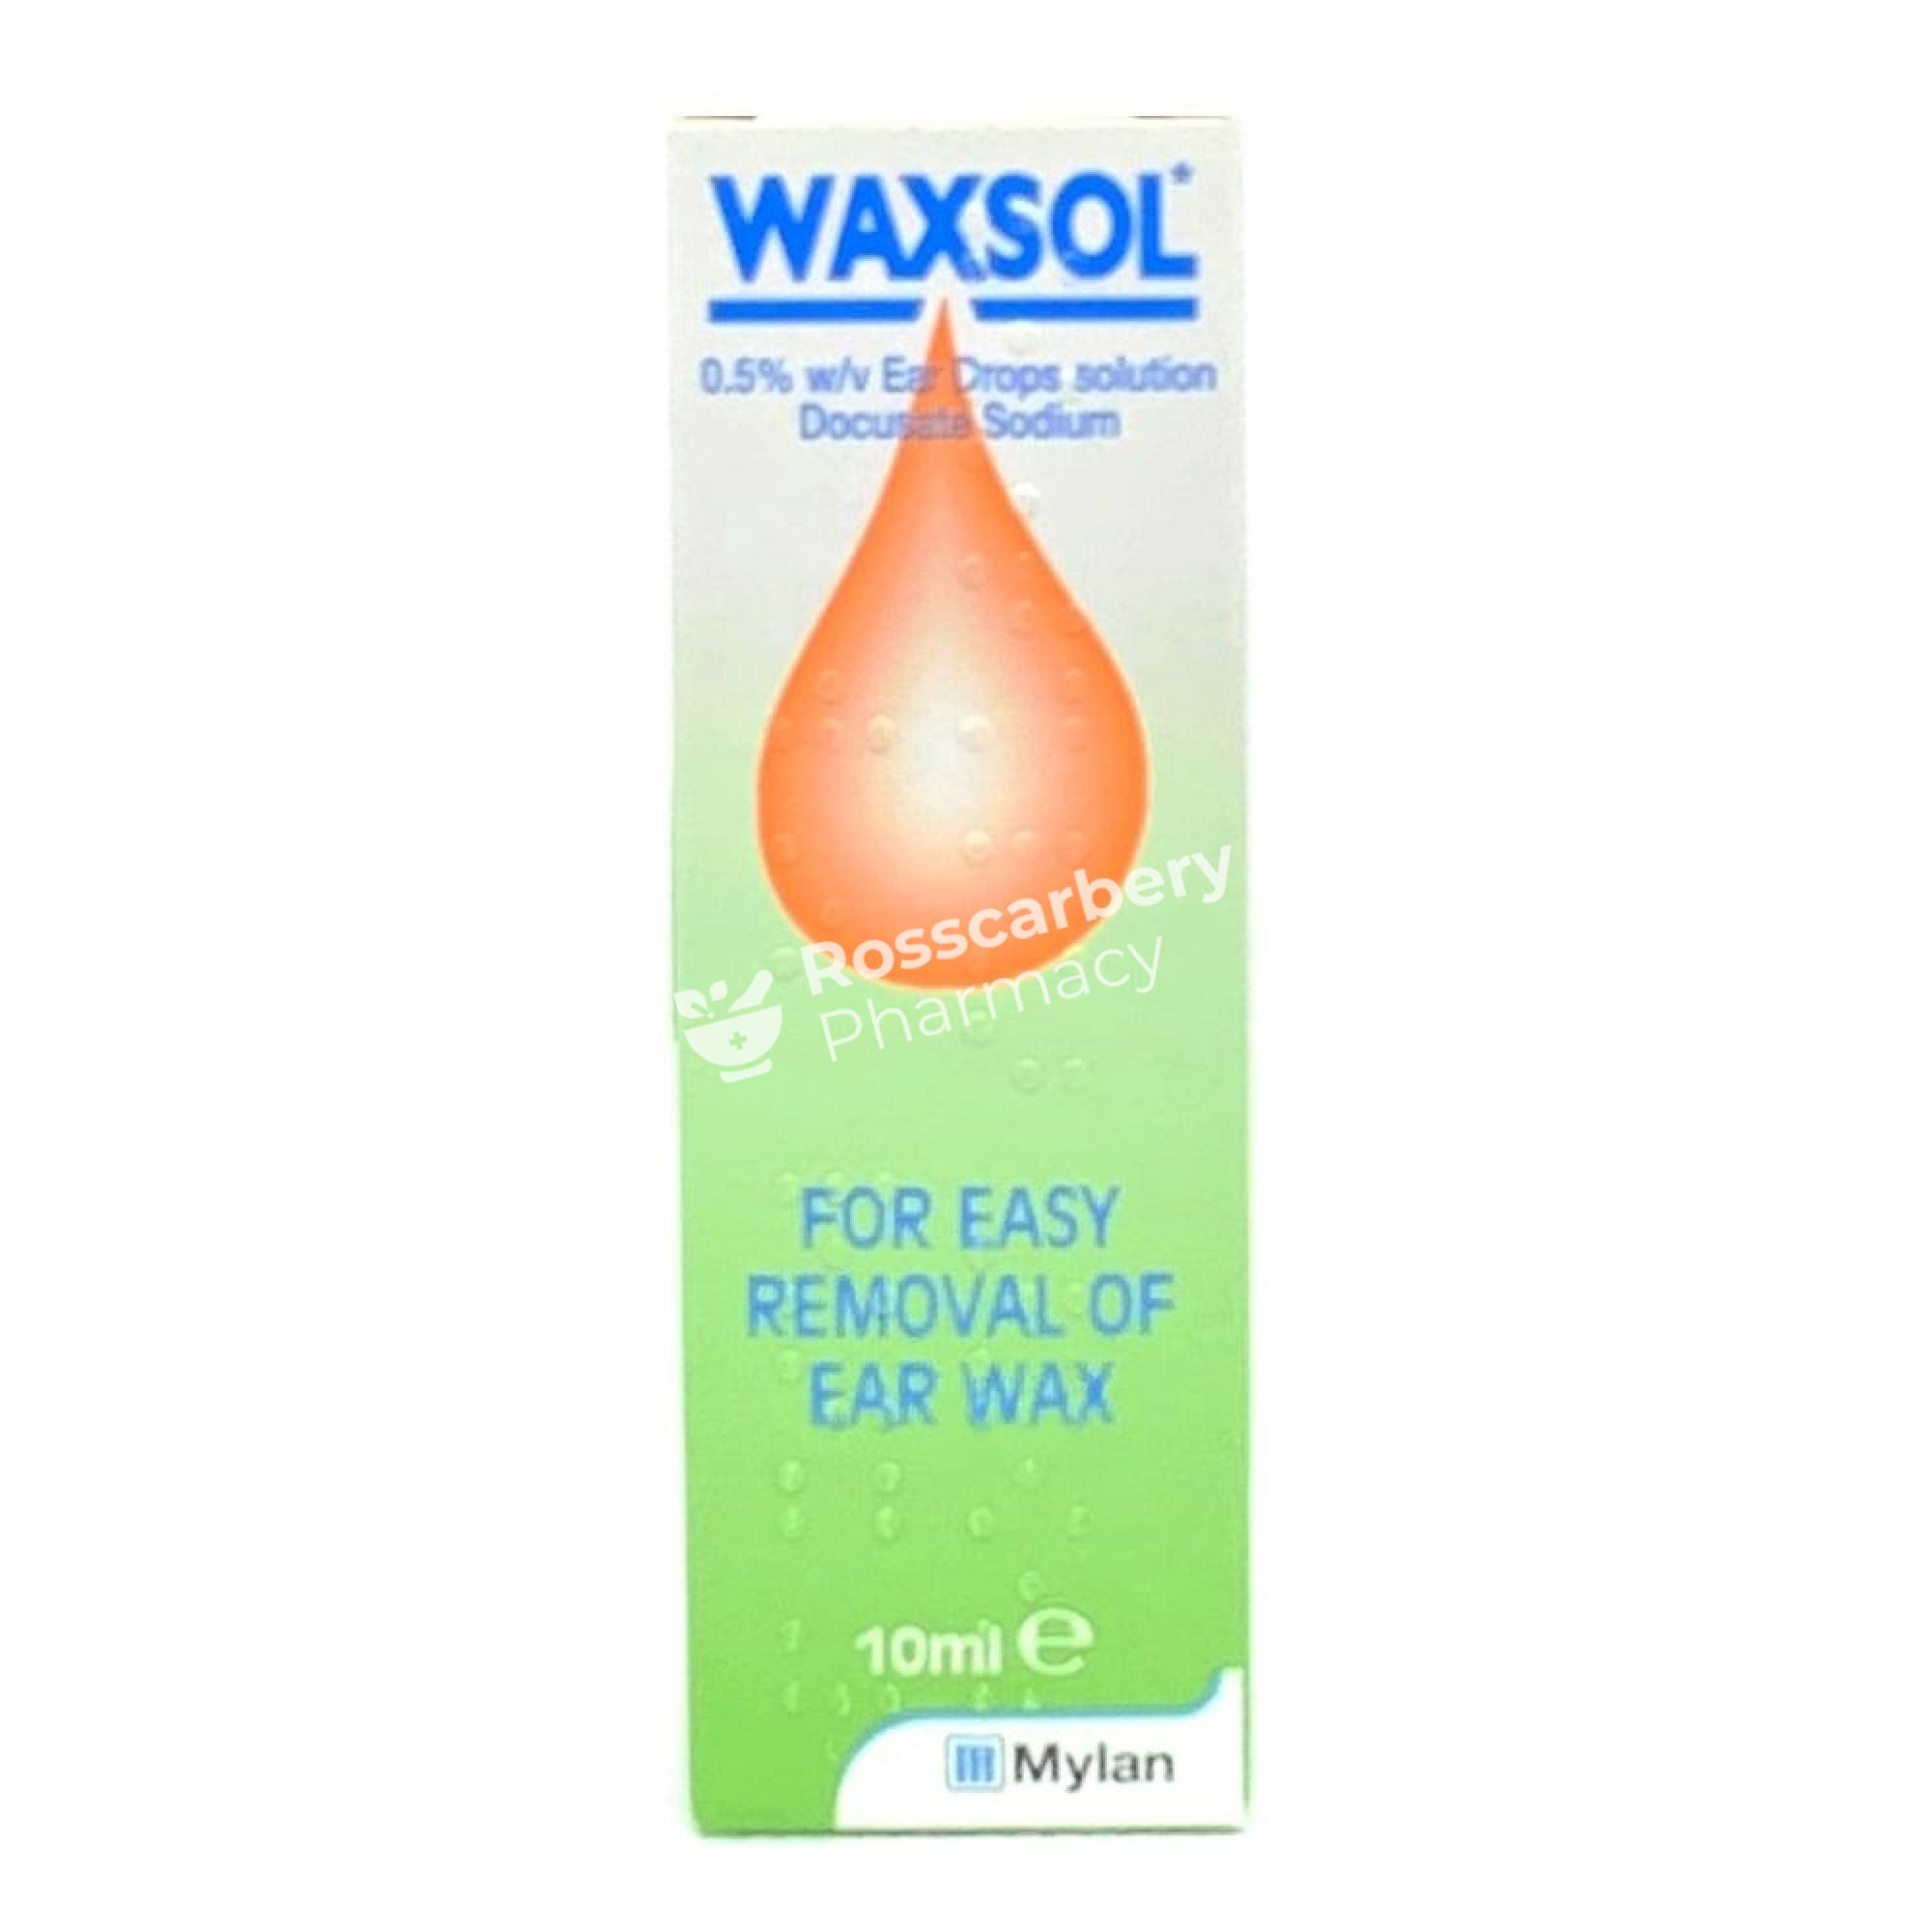 Waxsol 0.5% W/v Ear Drops Solution Wax Treatment